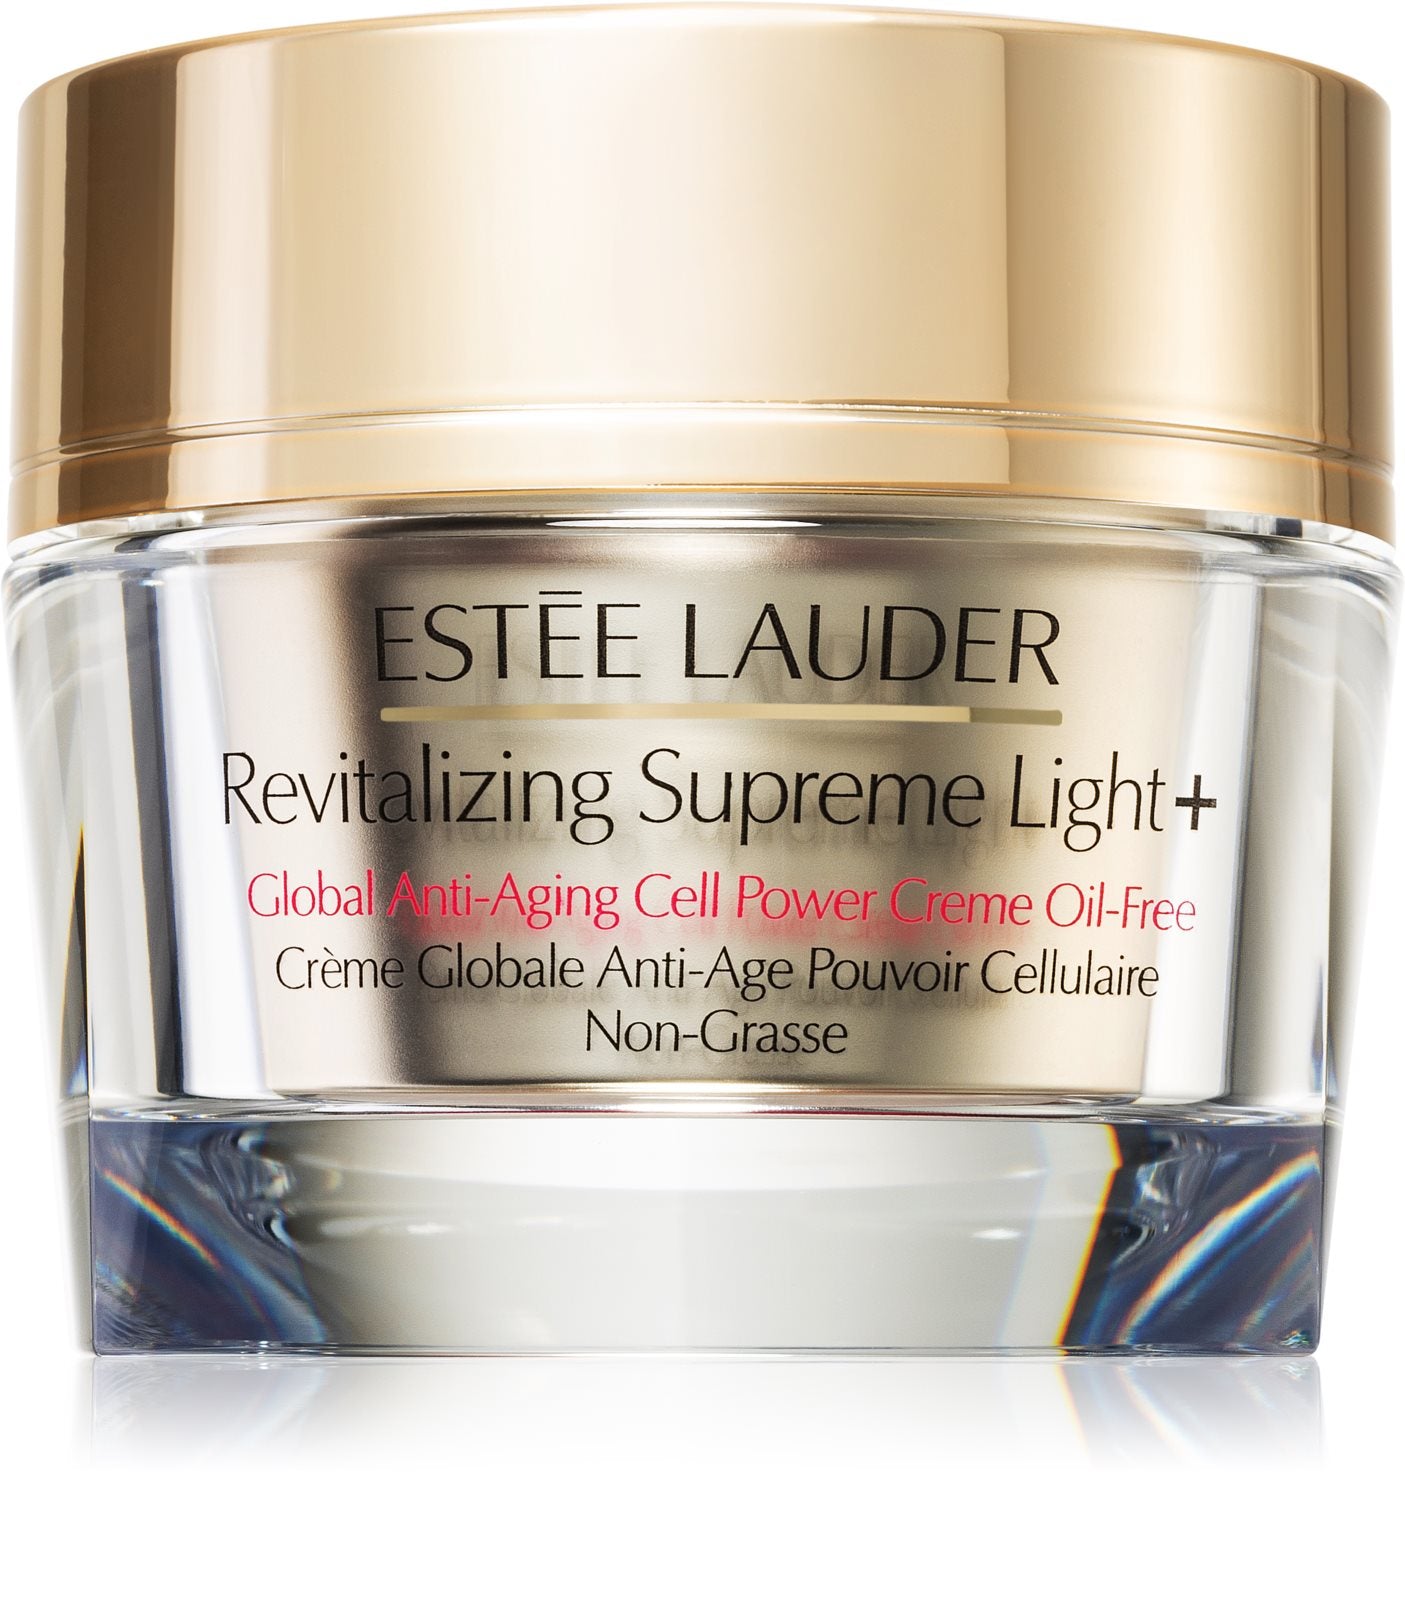 Estee Lauder Revitalizing Supreme+ Light + Global Anti-Aging Cell Power Creme Oil-Free